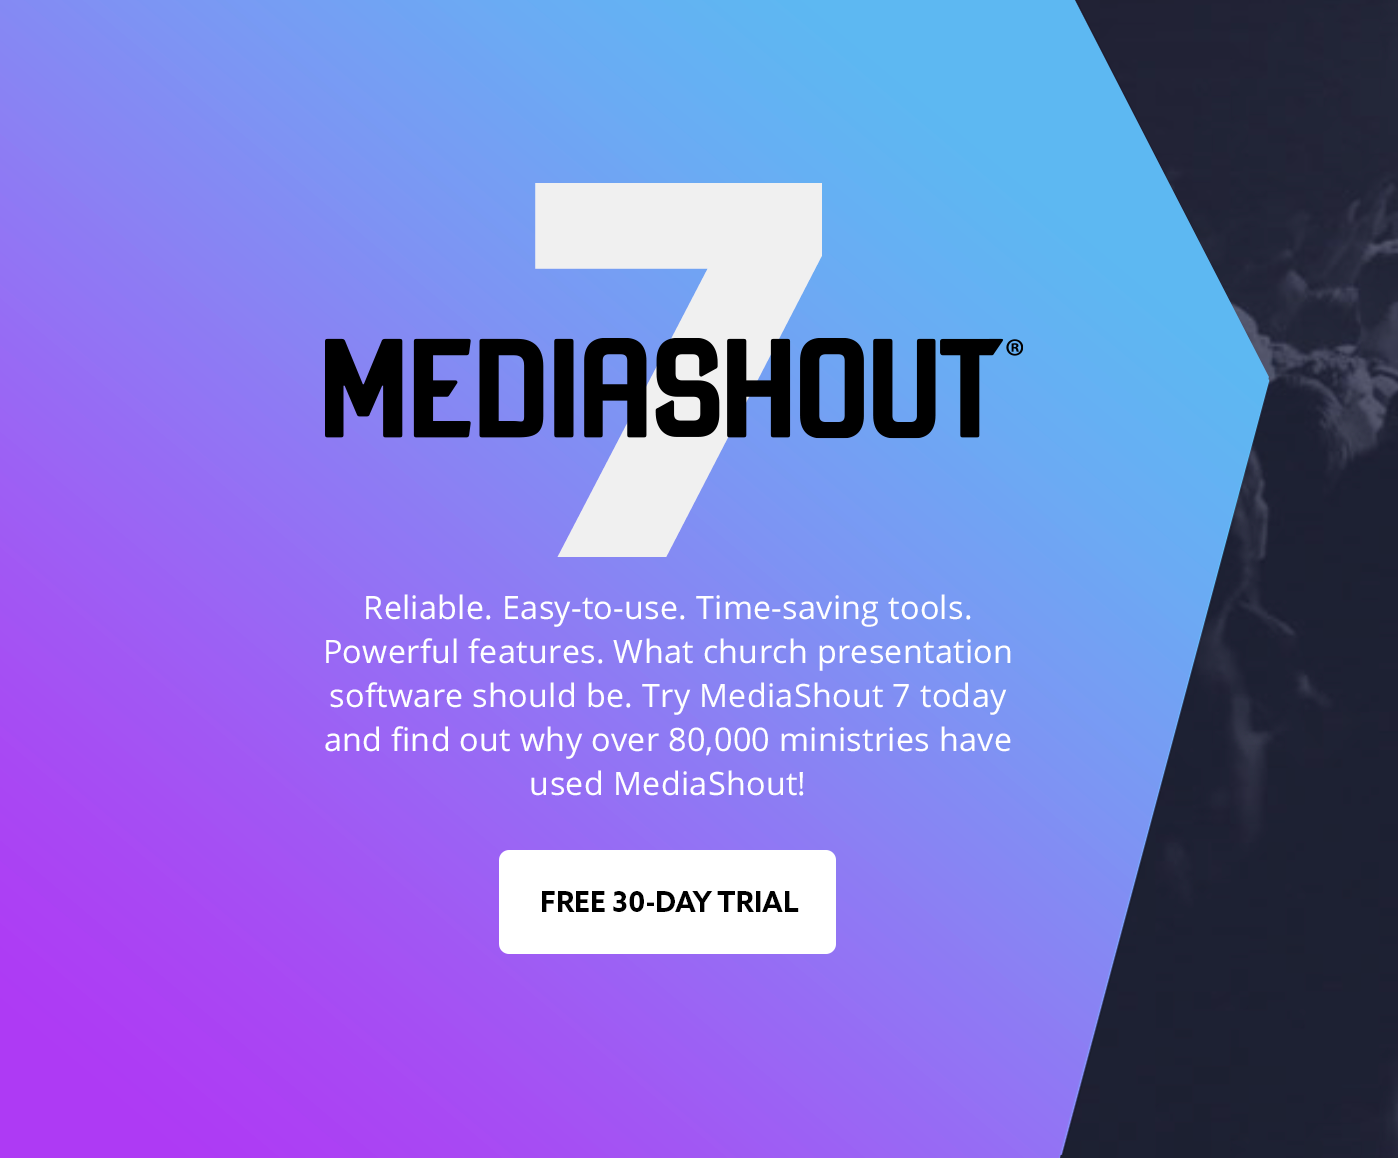 MediaShout 7 Church Presentation Software